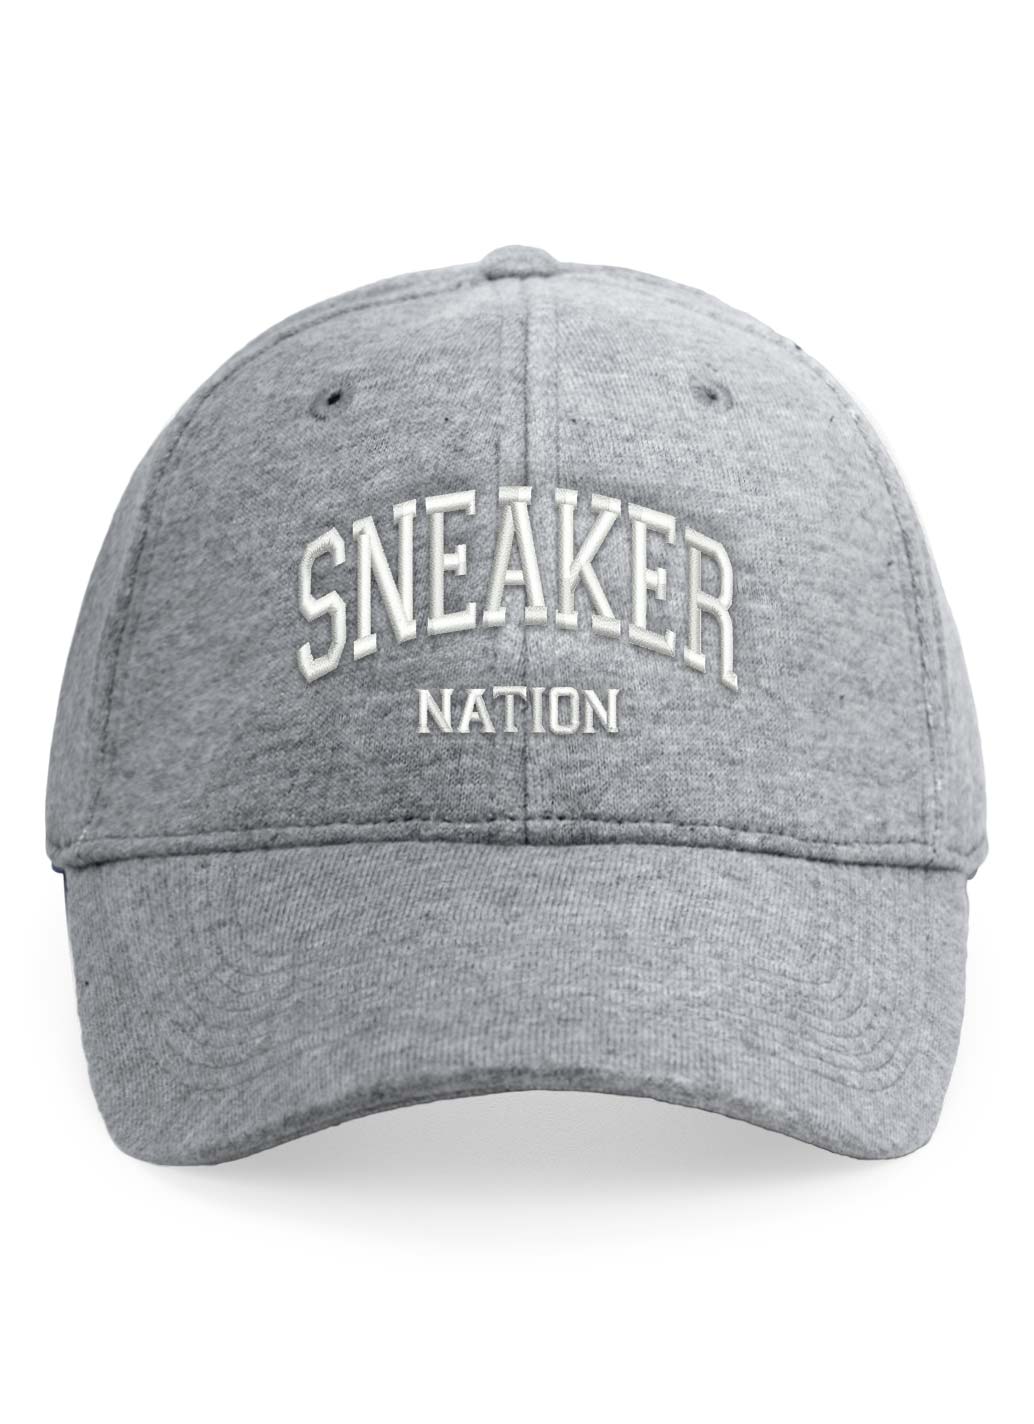 Sneaker Nation Baseball Cap - Marl Grey